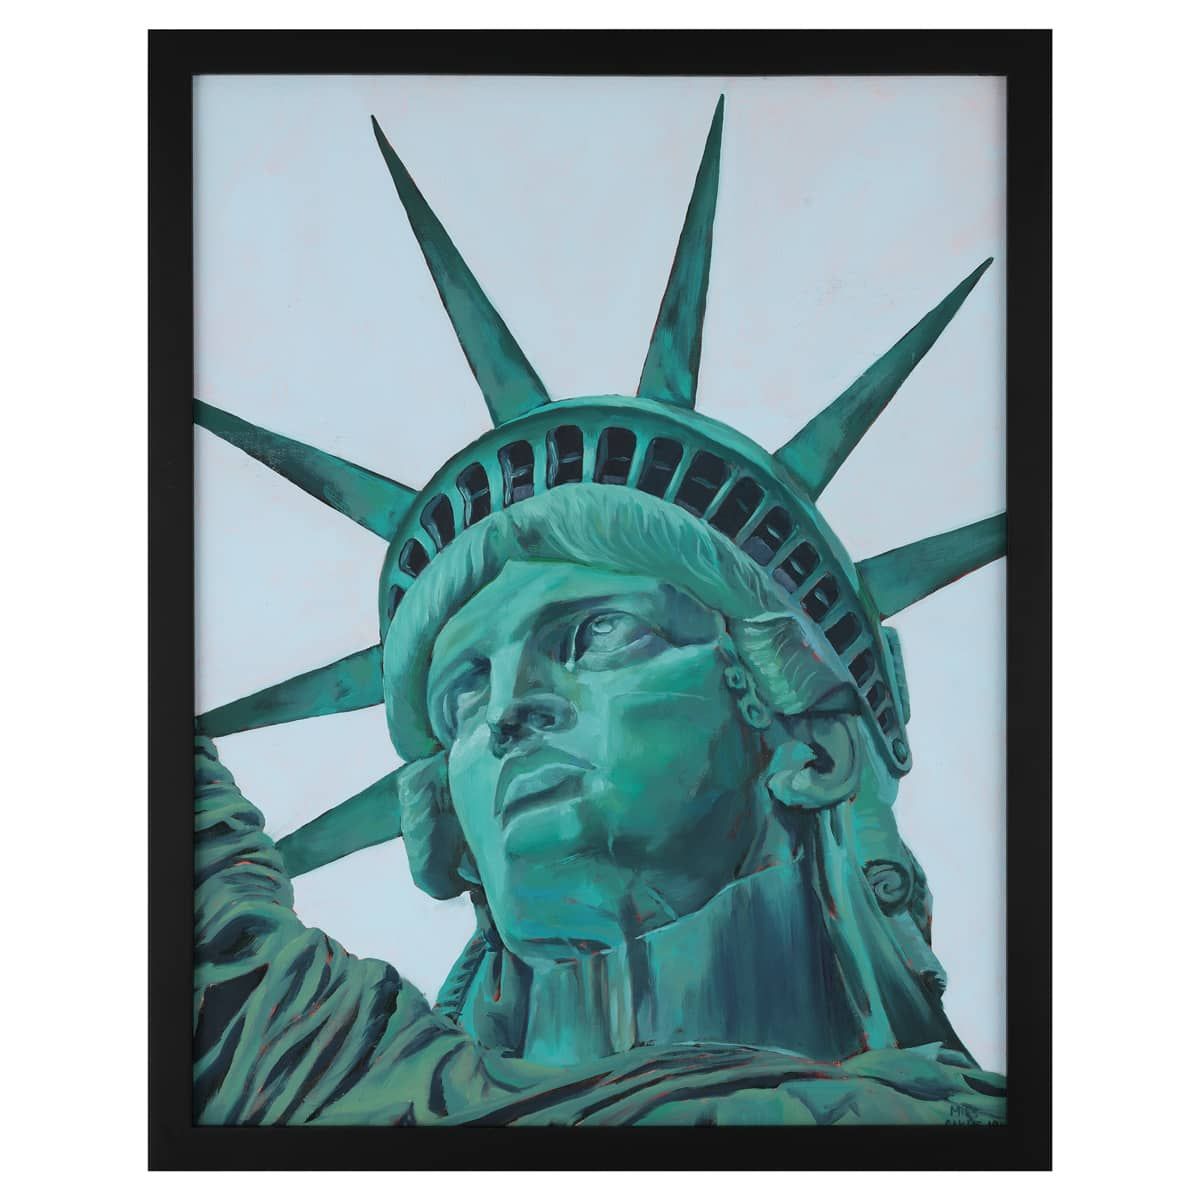 Soho Oils "Lady Liberty" artwork by Miss Cakes, Emmy Kline